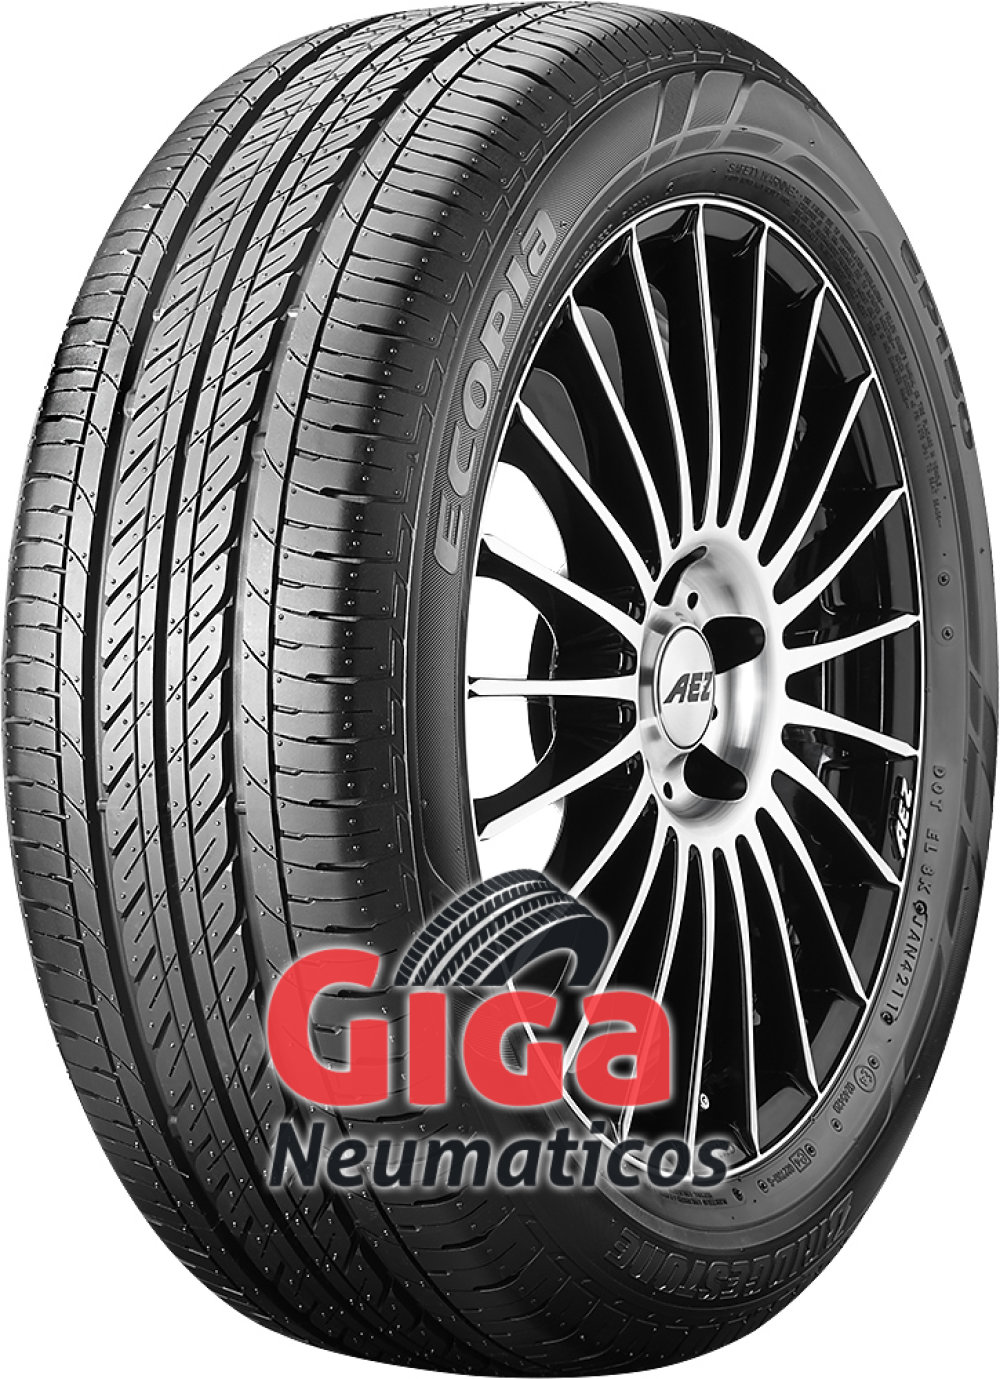 neumáticos Bridgestone EP150 195/65 R15 91H a precios económicos - giga-neumaticos.es